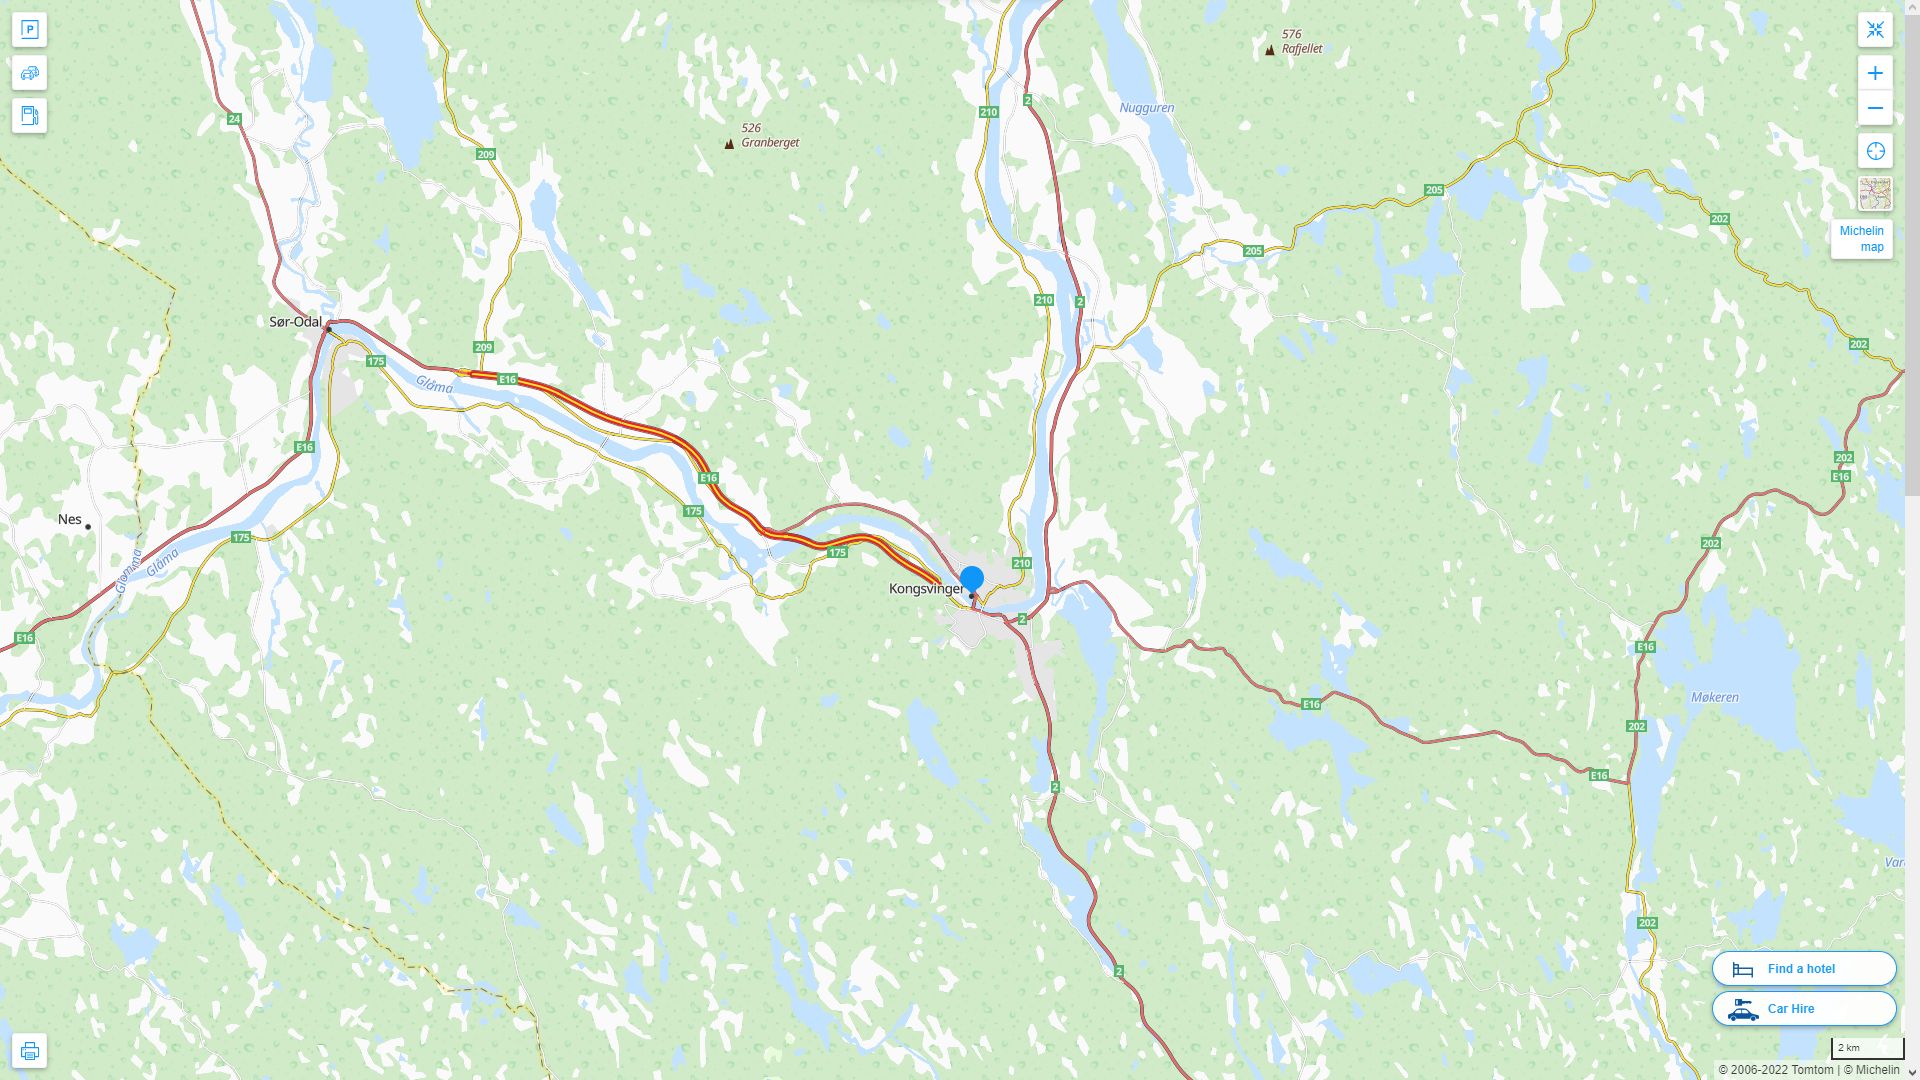 Kongsvinger Highway and Road Map